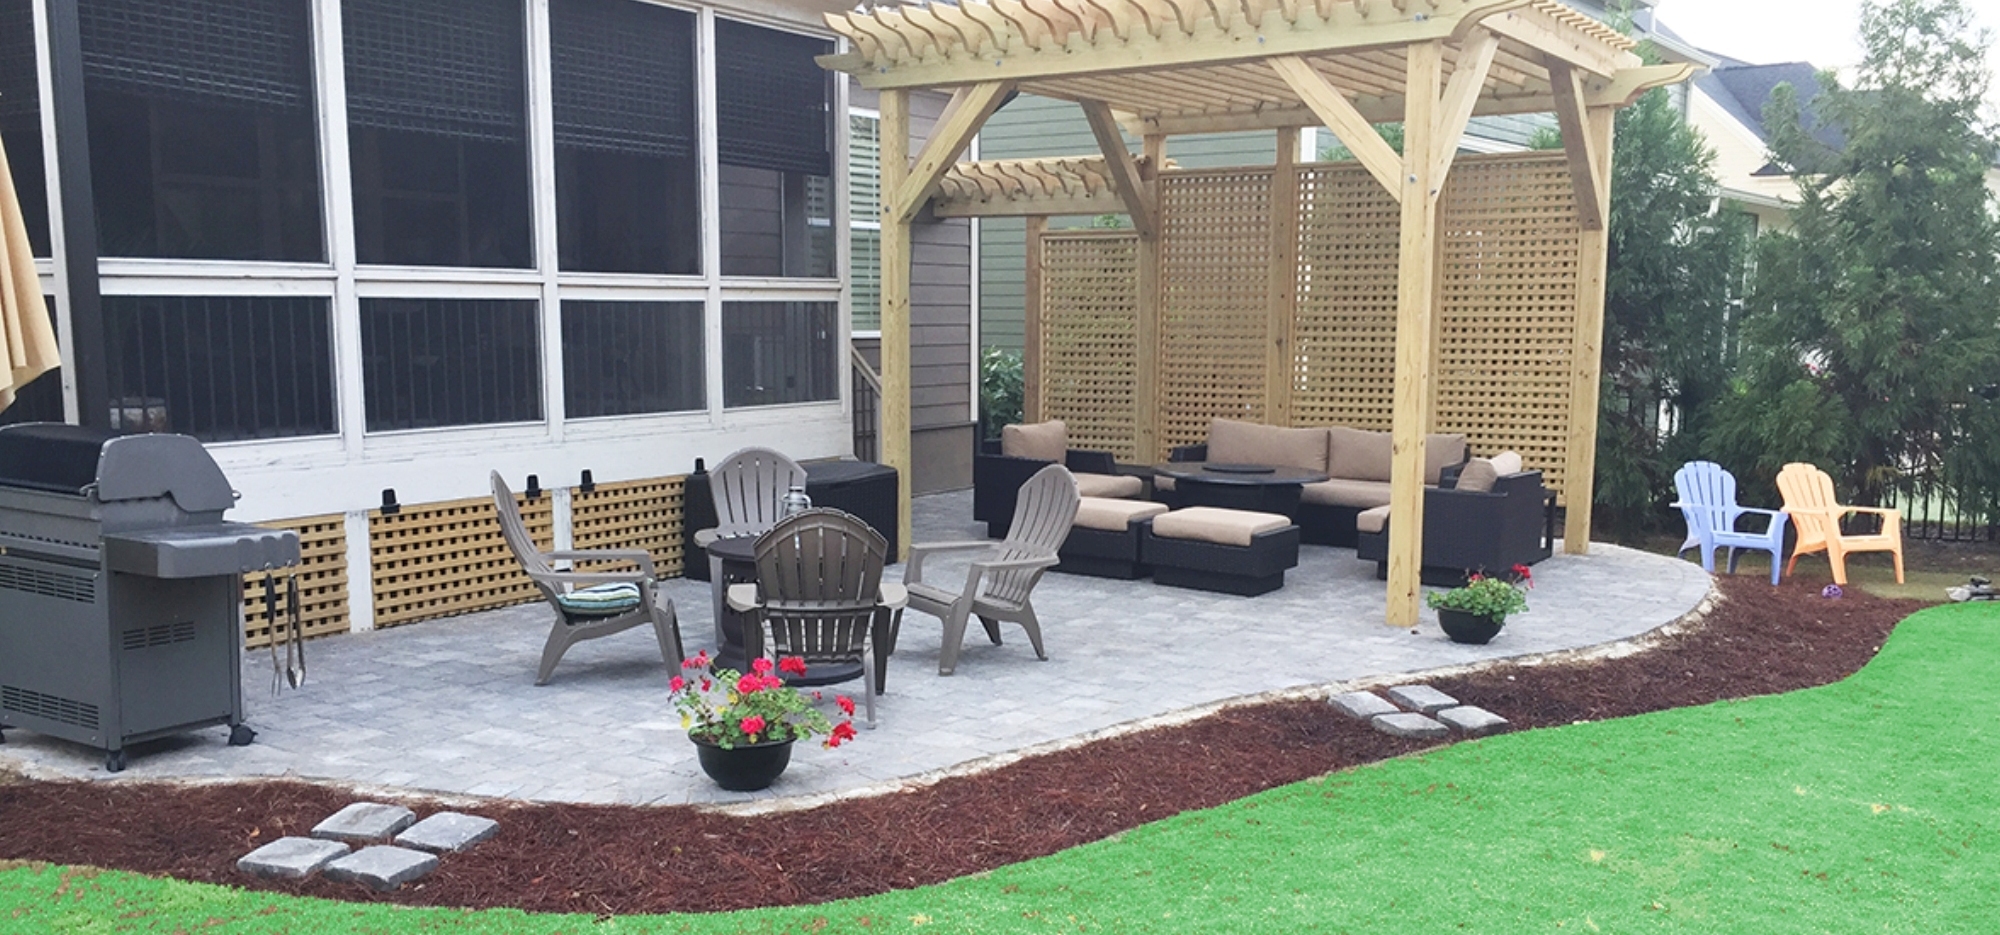 Outdoor living space custom paver and pergola